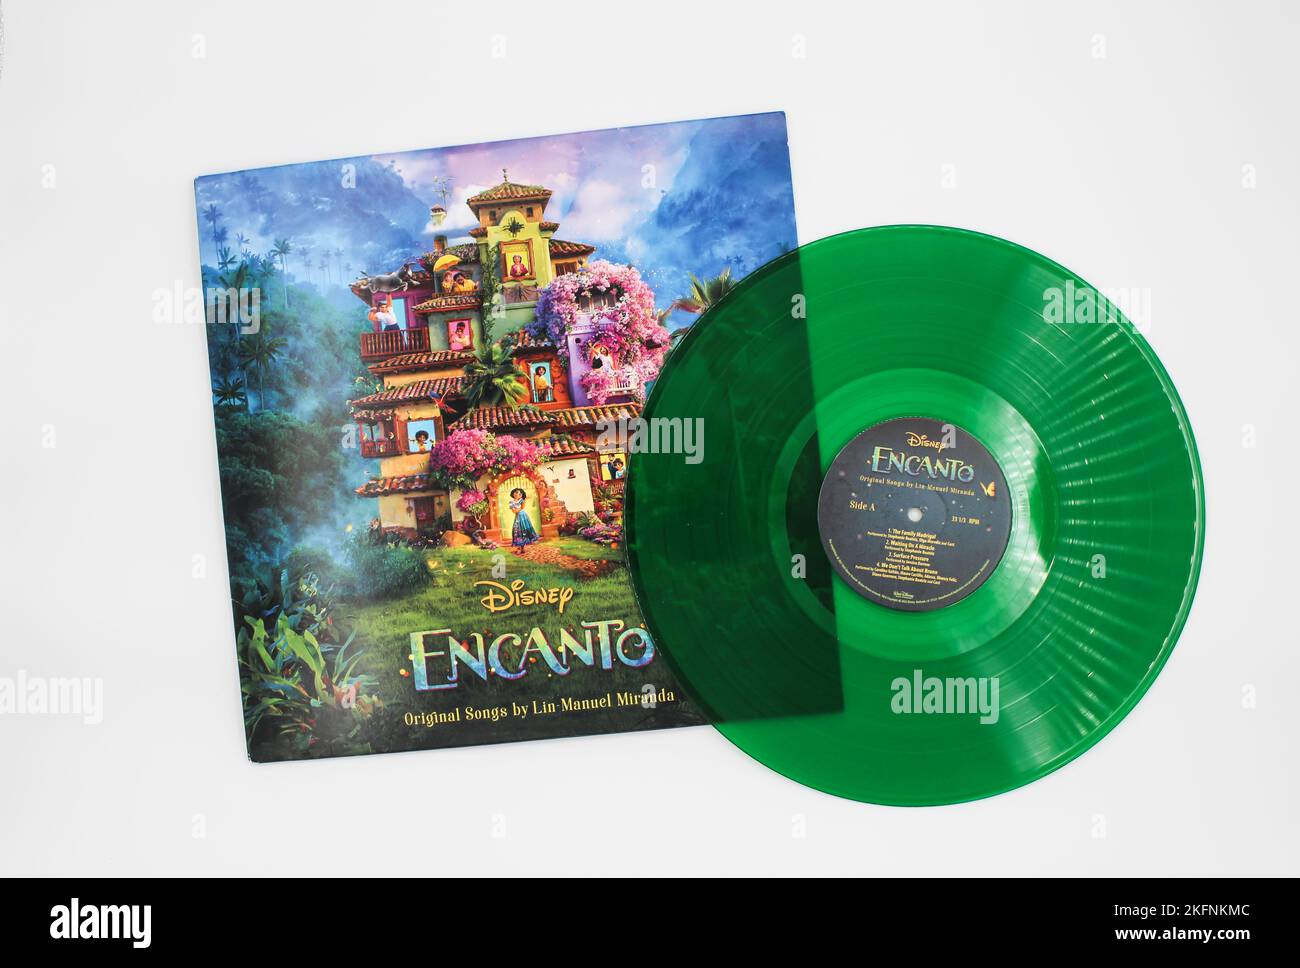 Encanto is the soundtrack album to Disney's 2021 film. Green vinyl record with partial album cover. Stock Photo